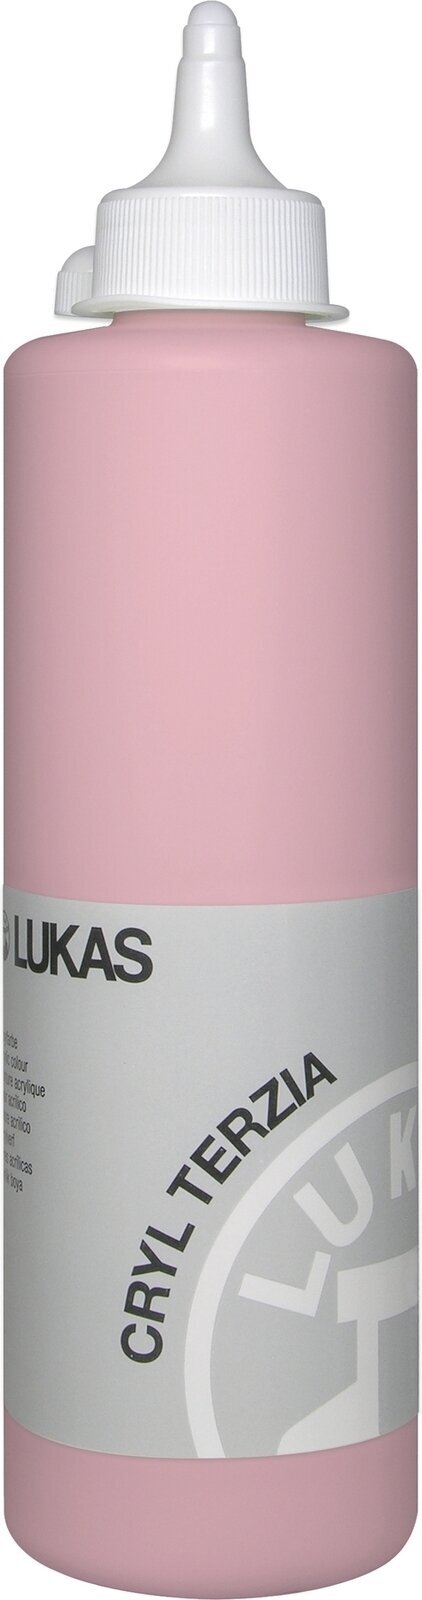 Acrylic Paint Lukas Cryl Terzia Acrylic Paint Plastic Bottle Acrylic Paint Peach Pink 500 ml 1 pc